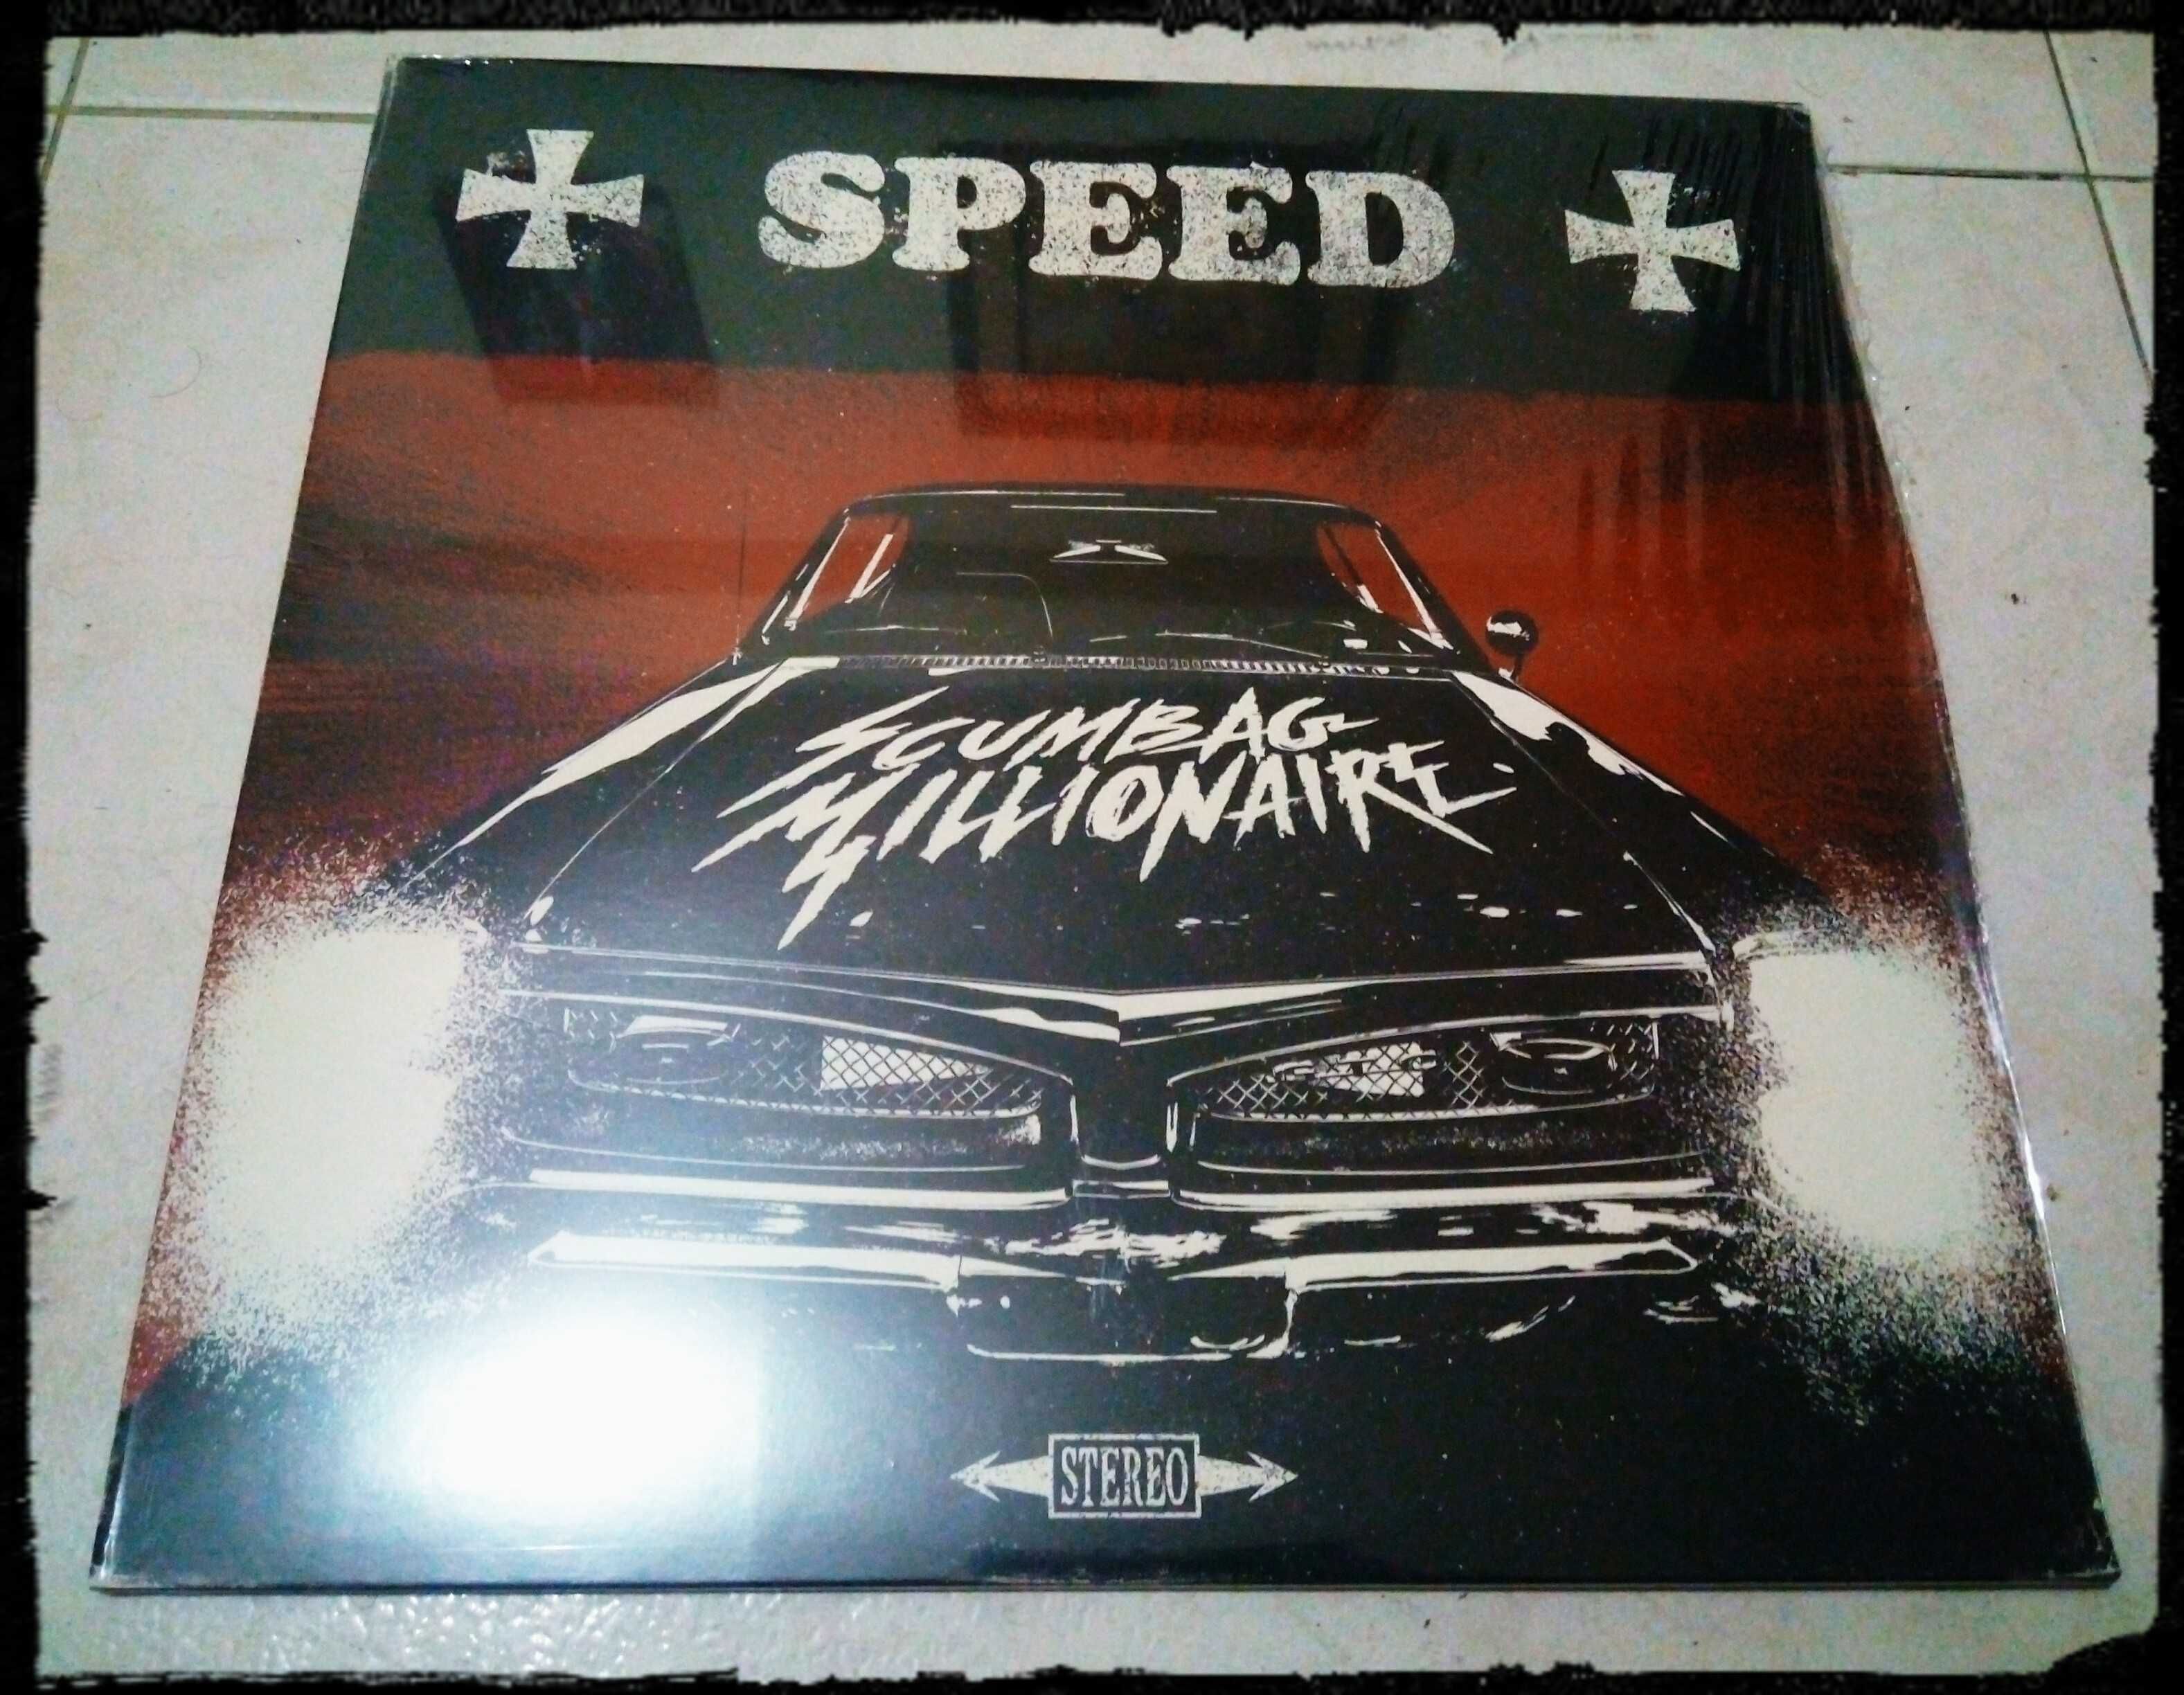 Scumbag Millionaire - " Speed " ... LP em vinil grey translúcido